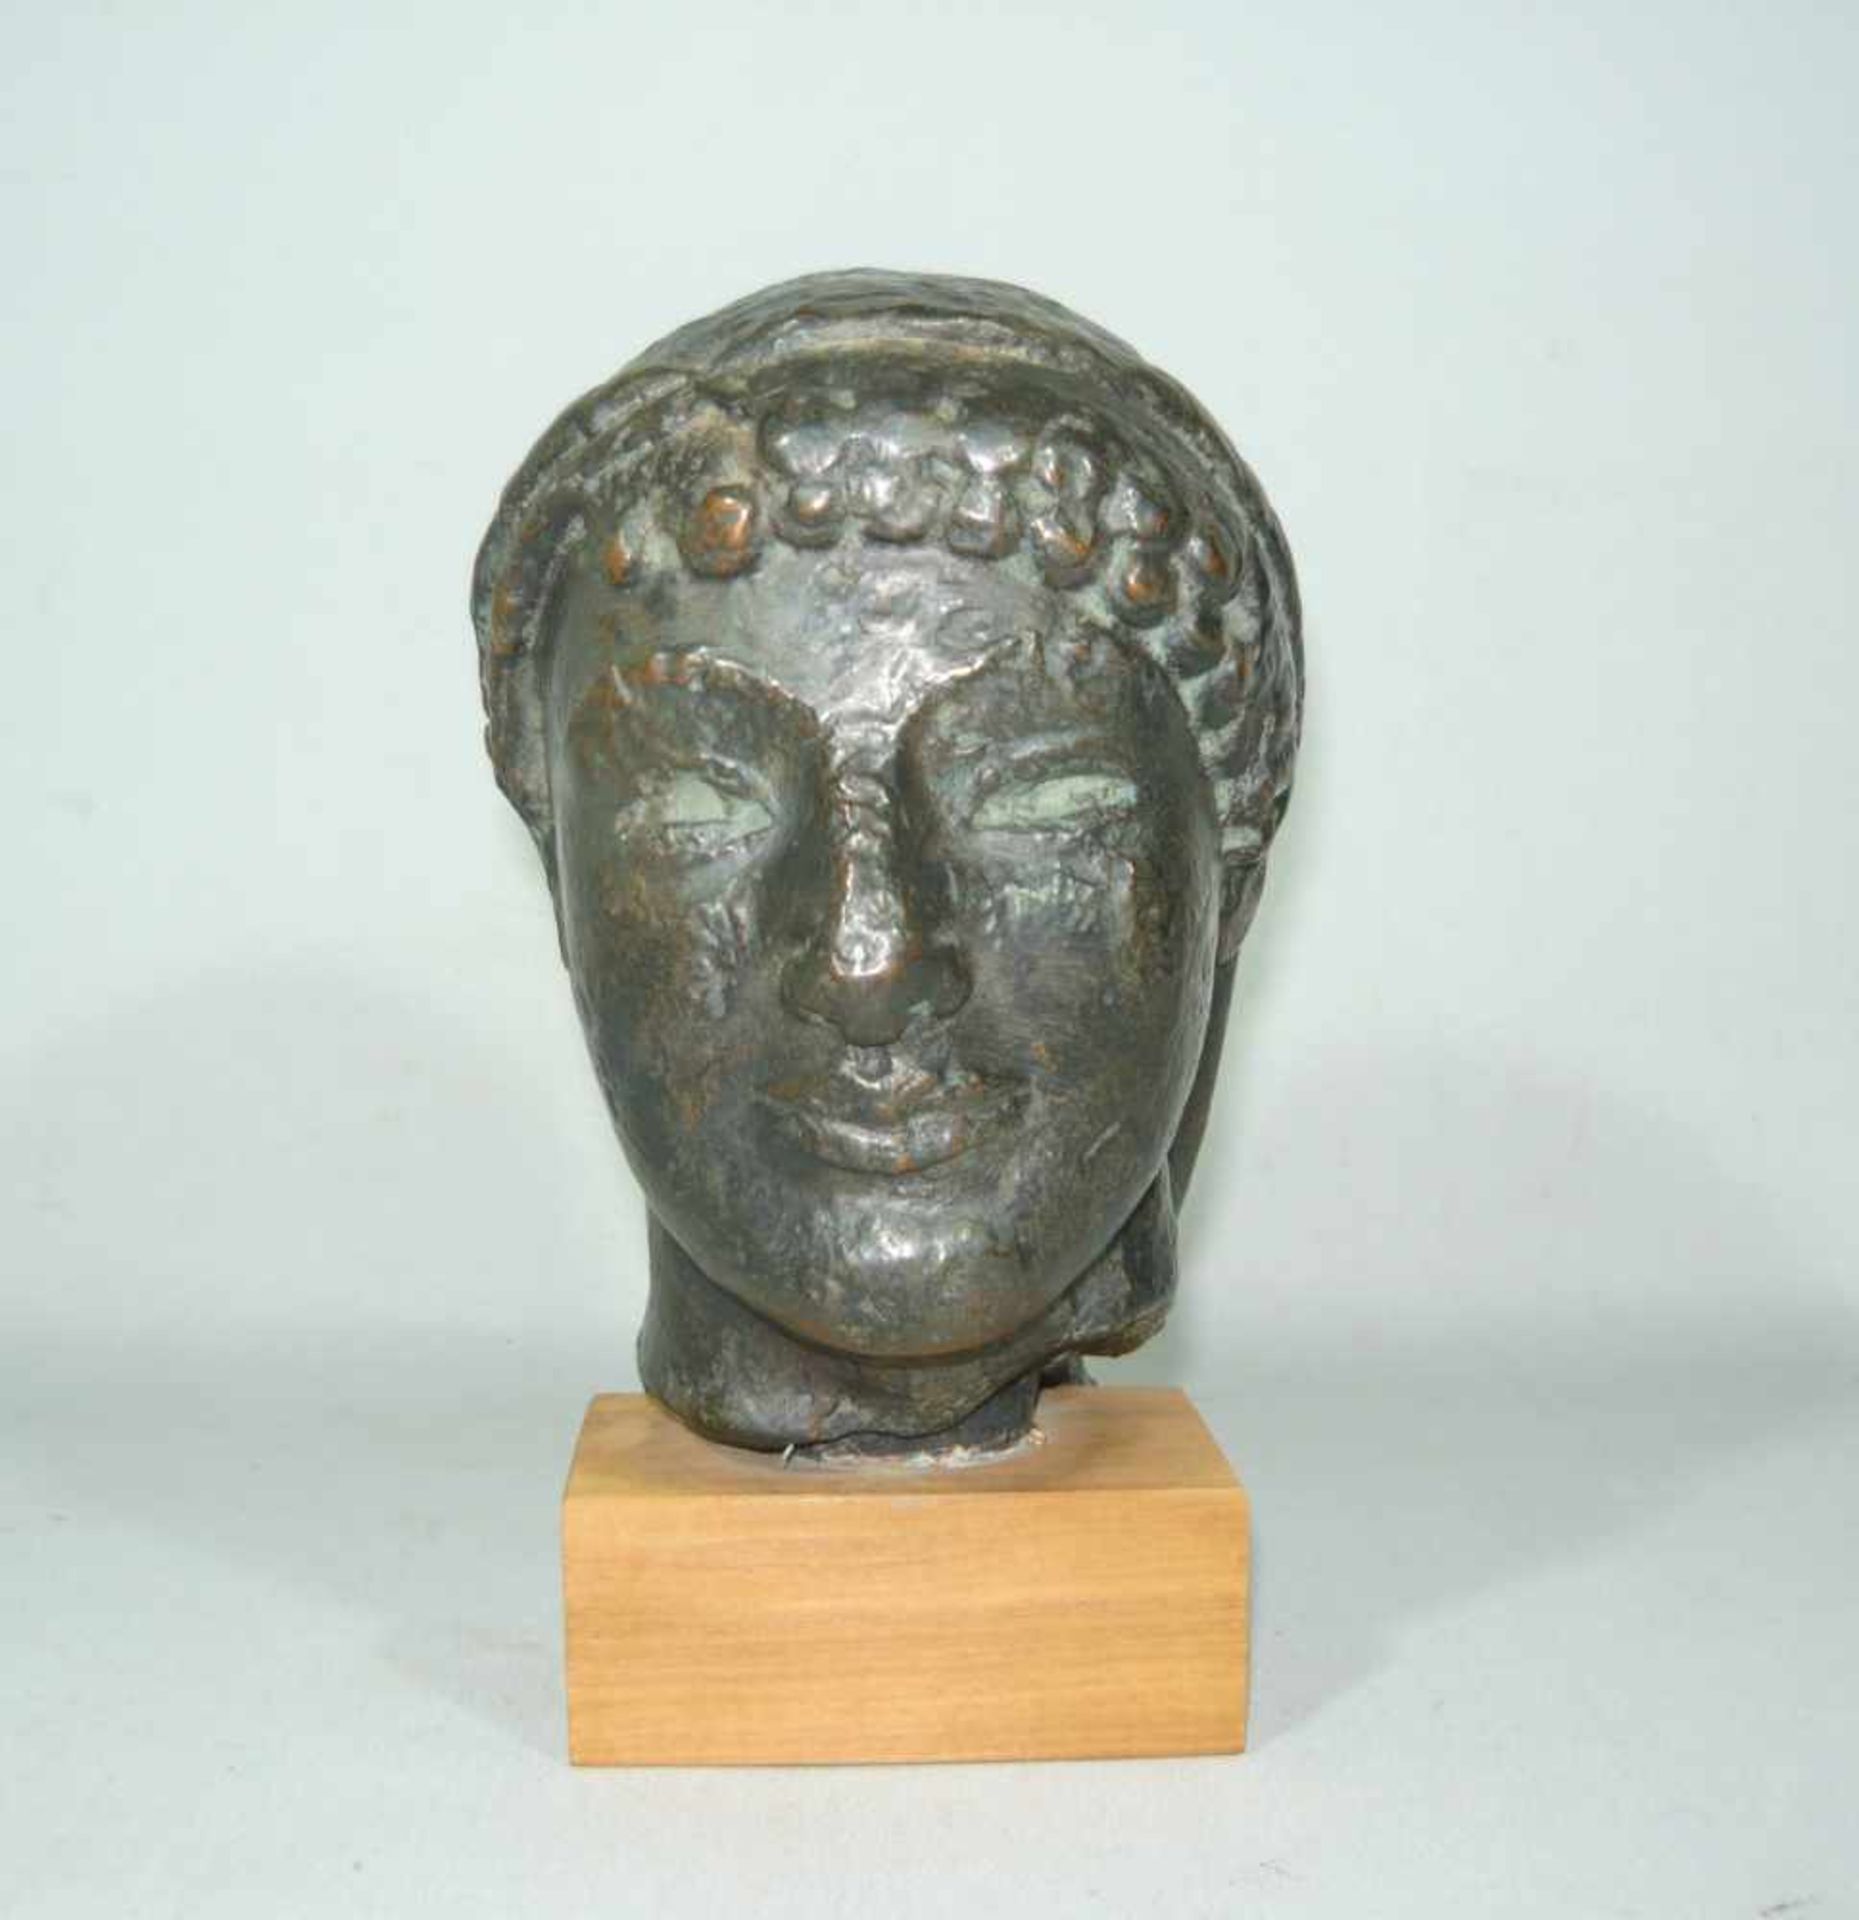 Museumsreplik eines antiken Kopfes. Wohl Bronze, auf Holzsockel montiert. H. inkl. Sockel ca. 19